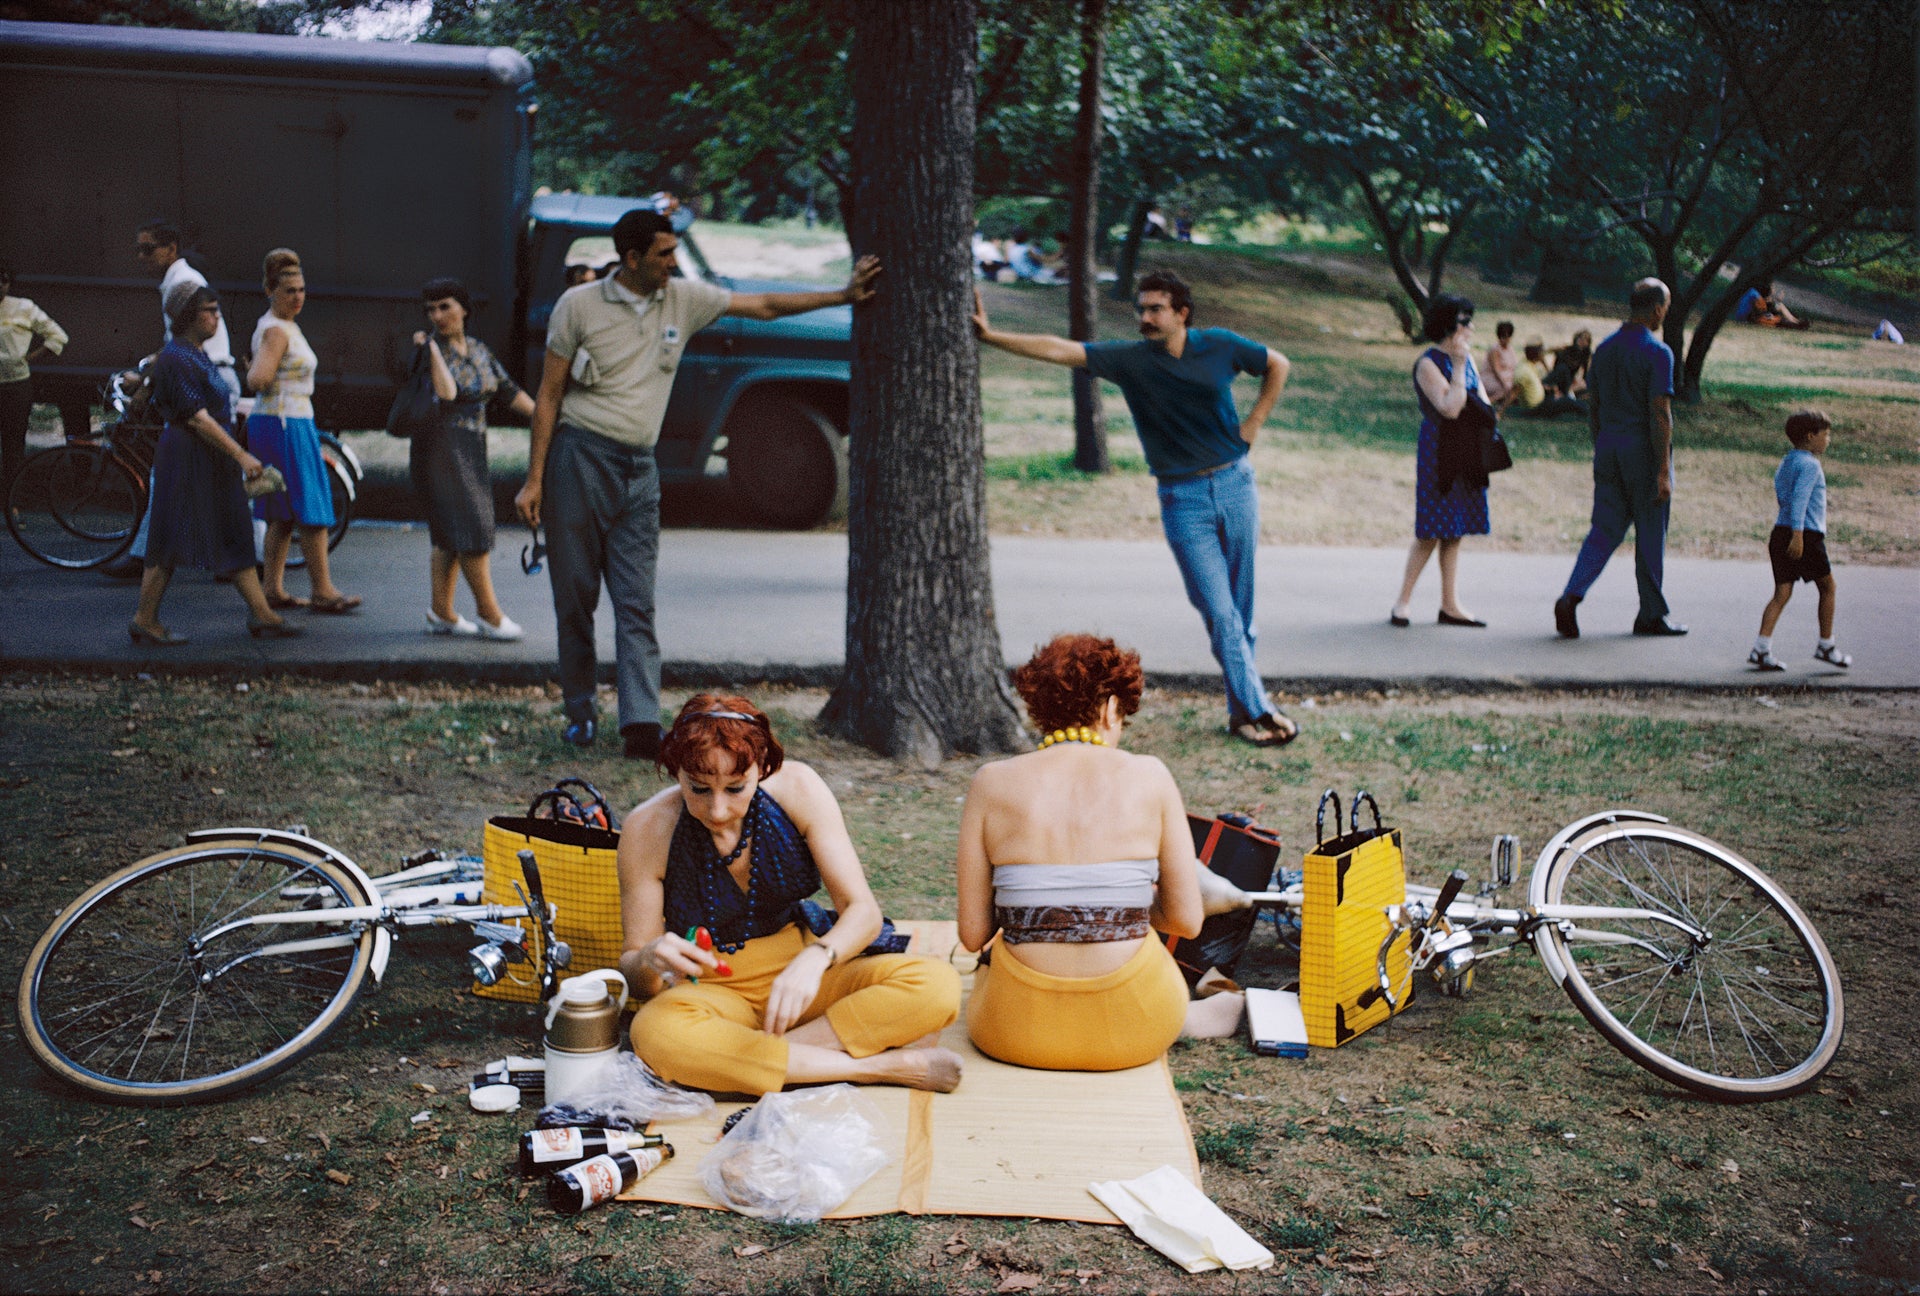 Central Park, New York, 1966